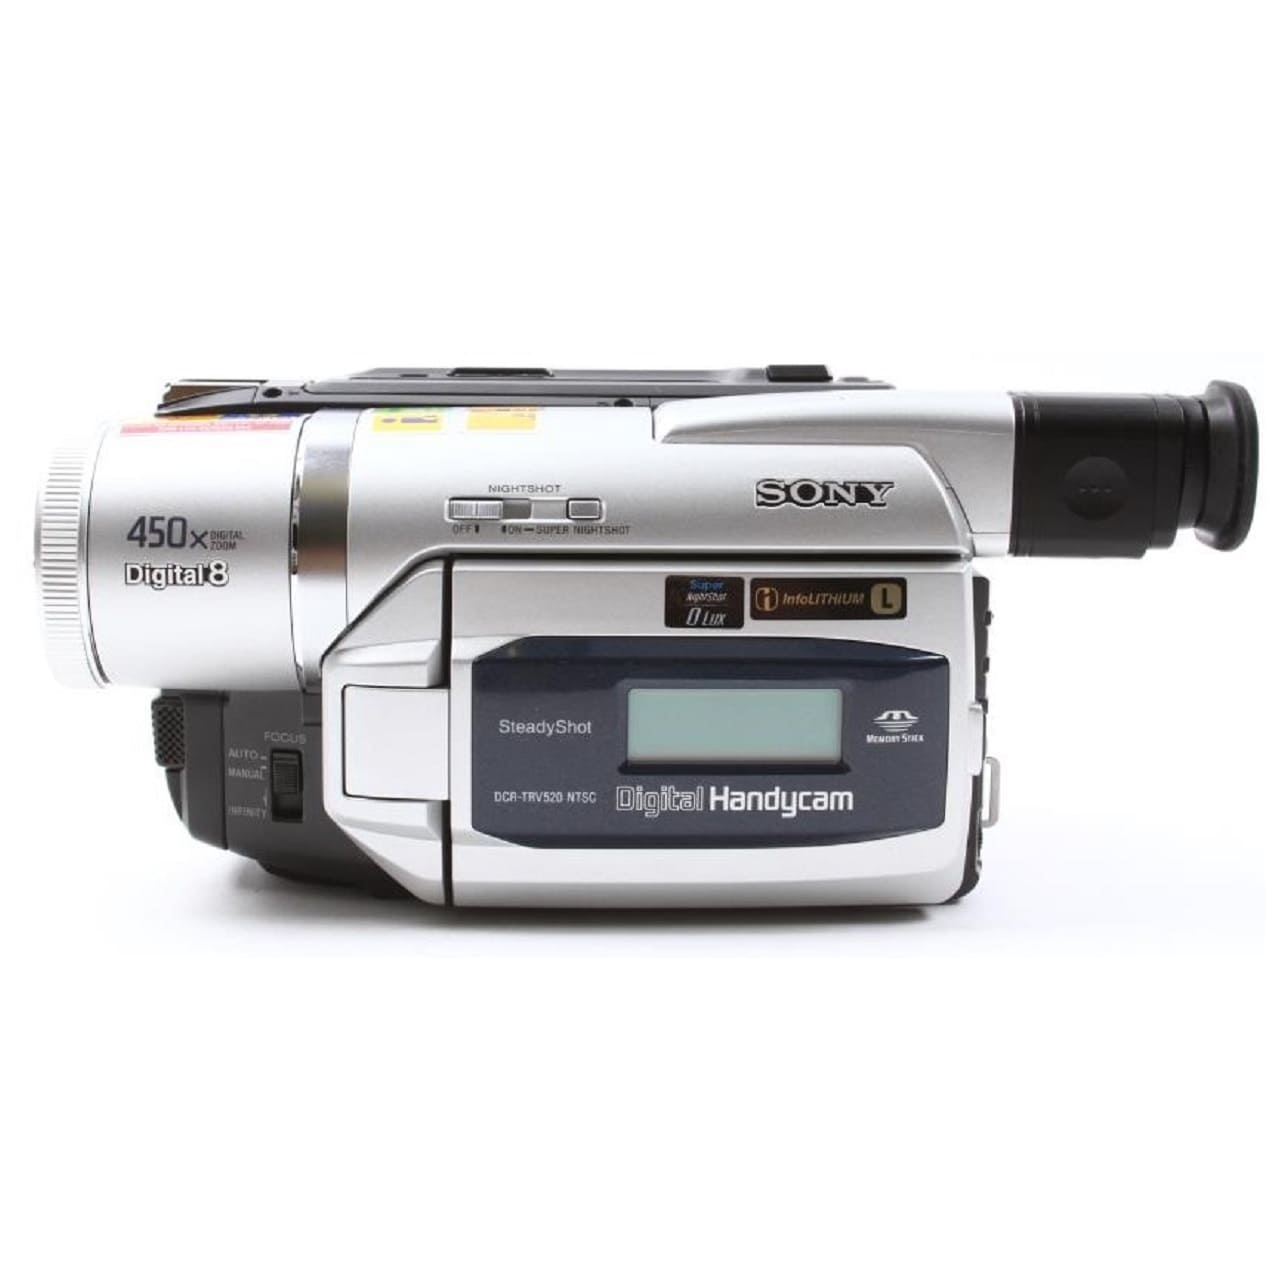 Sony DCR-TRV520 Handycam Digital8 Hi8 Video Camera 8mm Camcorder